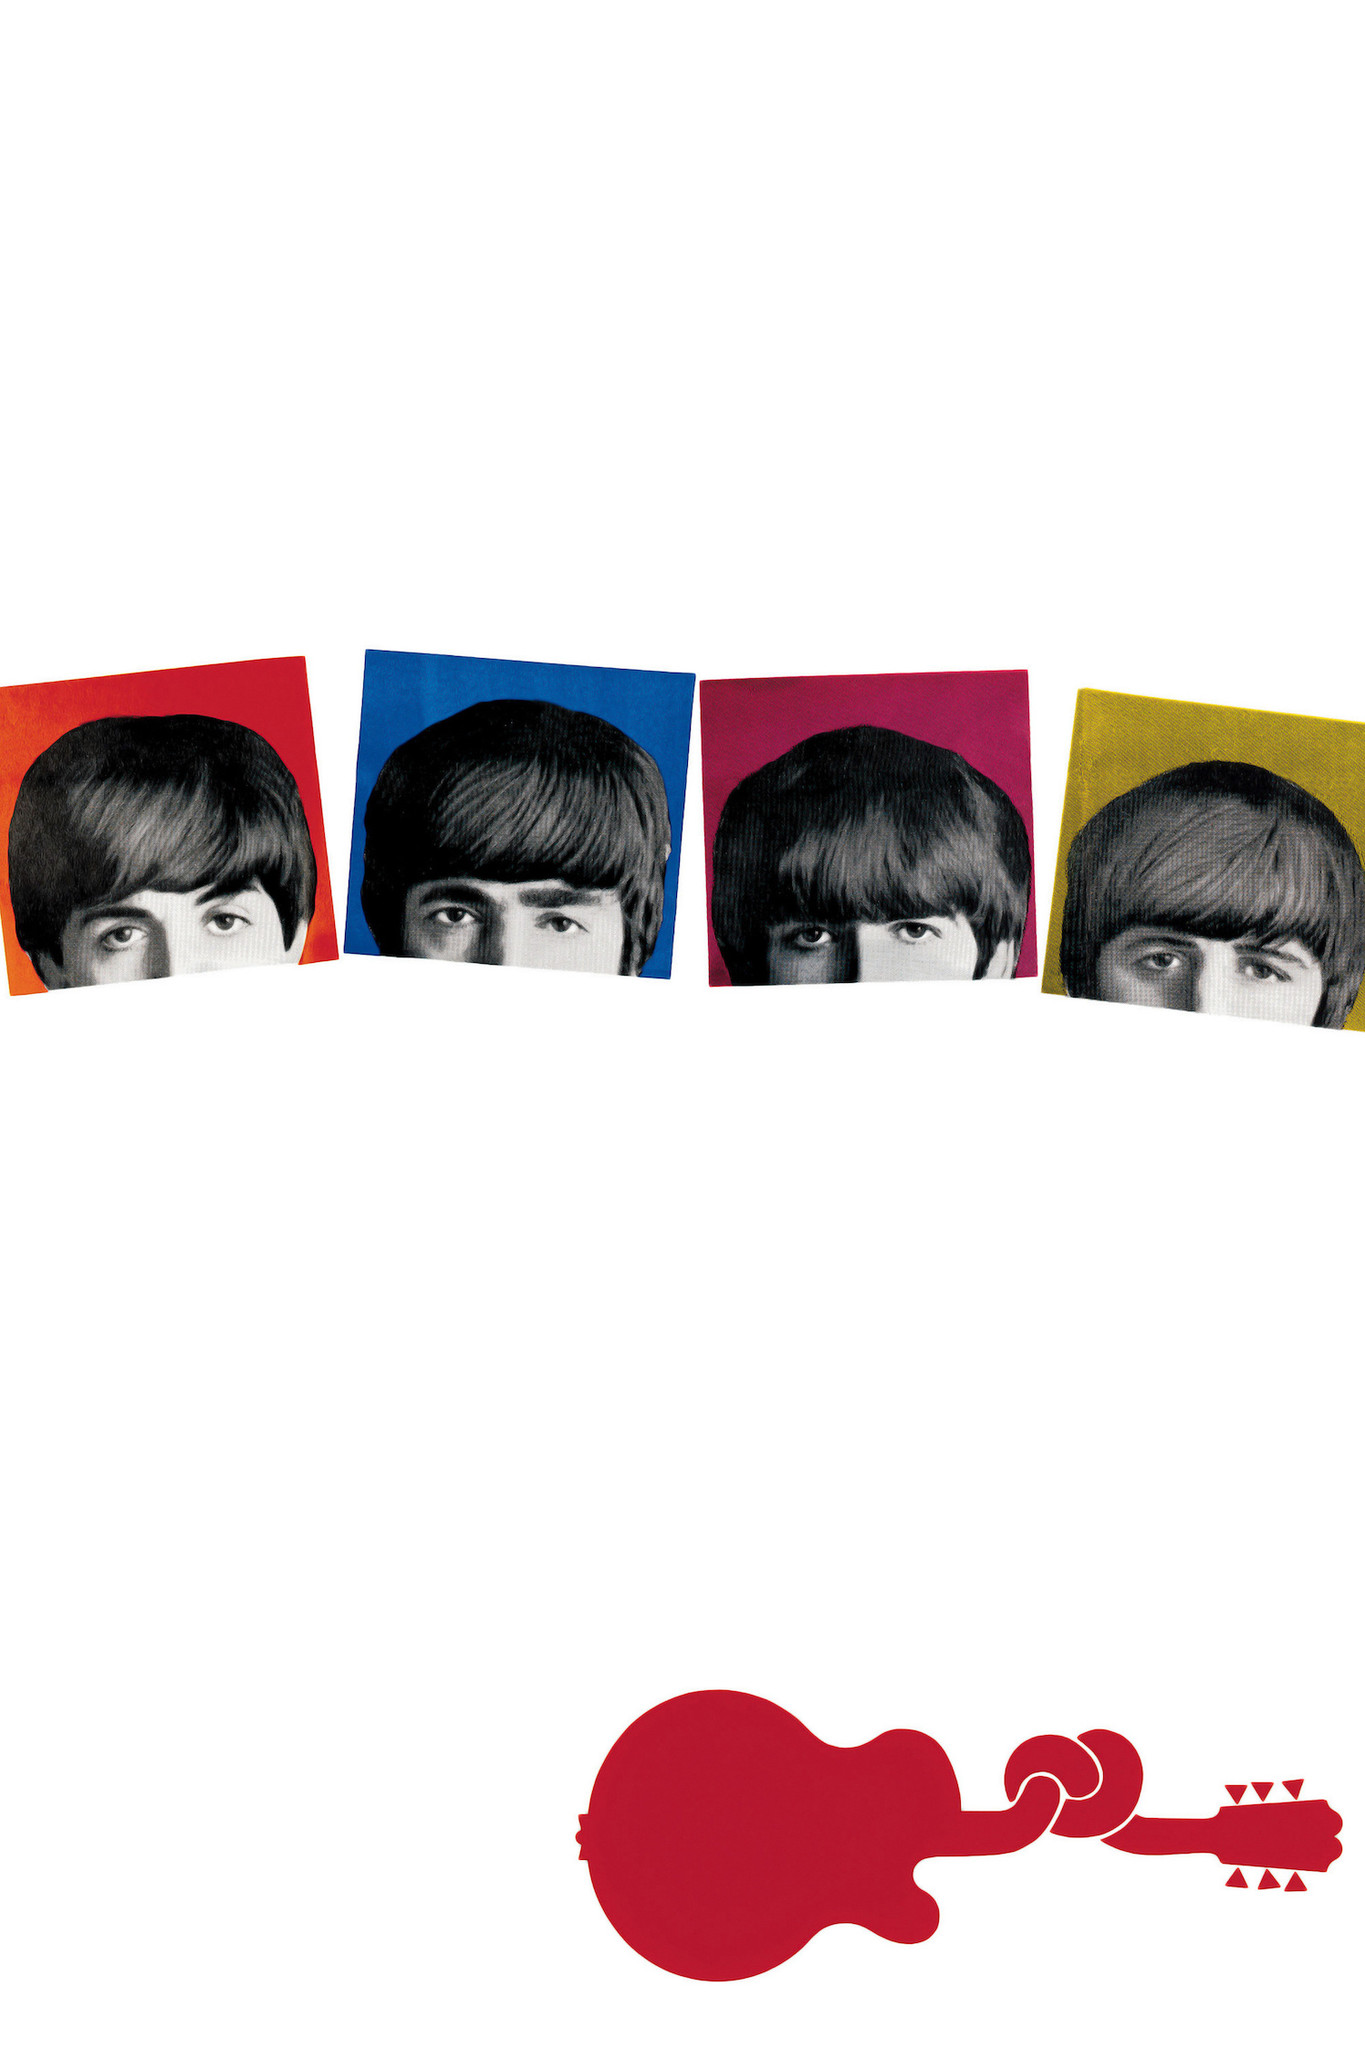 Poster - A Hard Day&apos;s Night, Beatles, originele filmposter, verpakt in kartonnen rolkoker, incl bevestigingsmateriaal